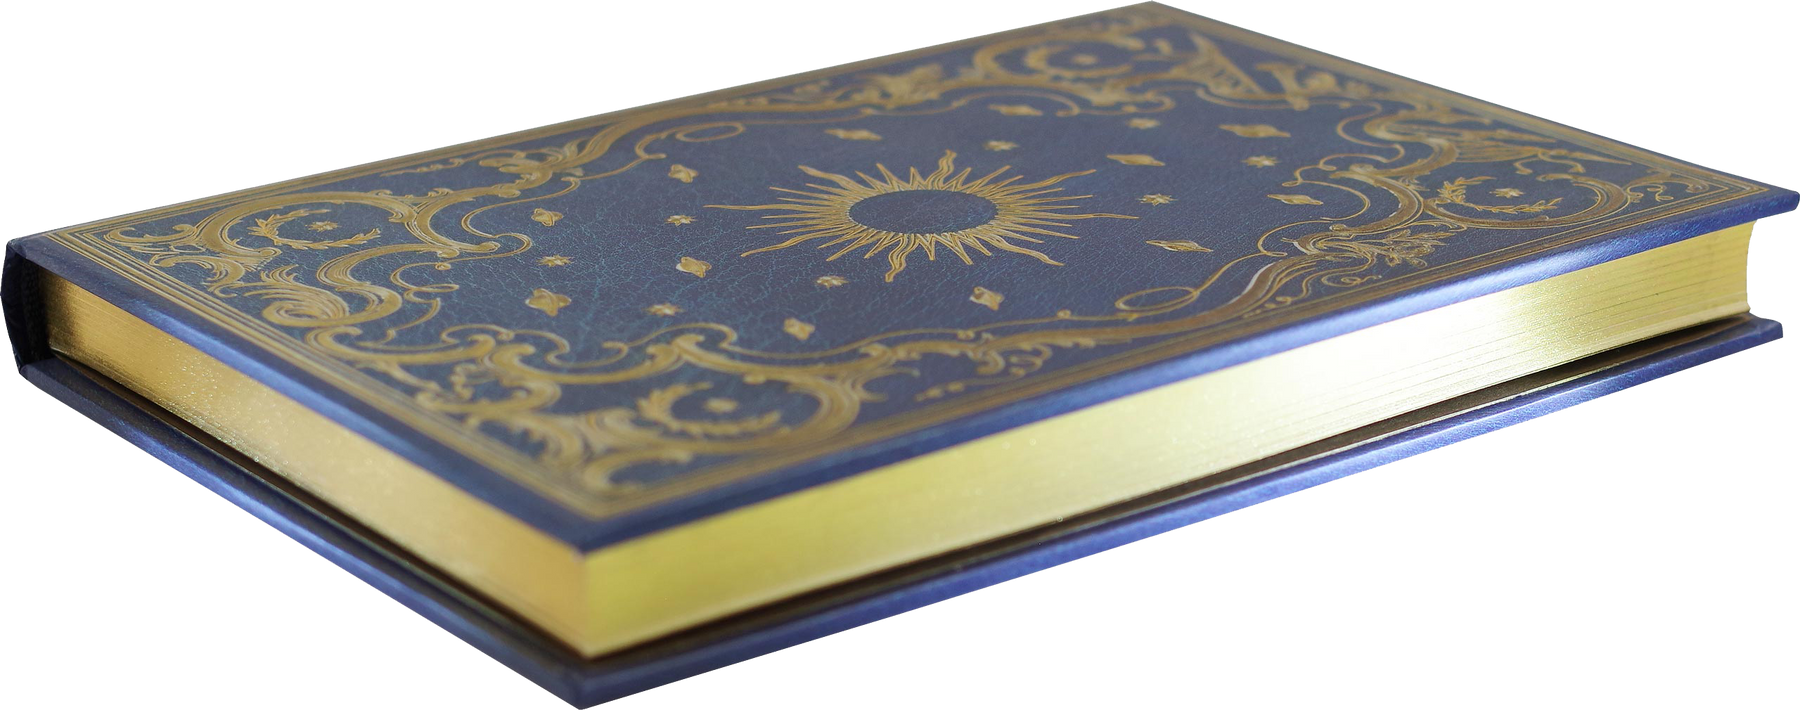 Vintage Celestial Journal: Celestial Diary